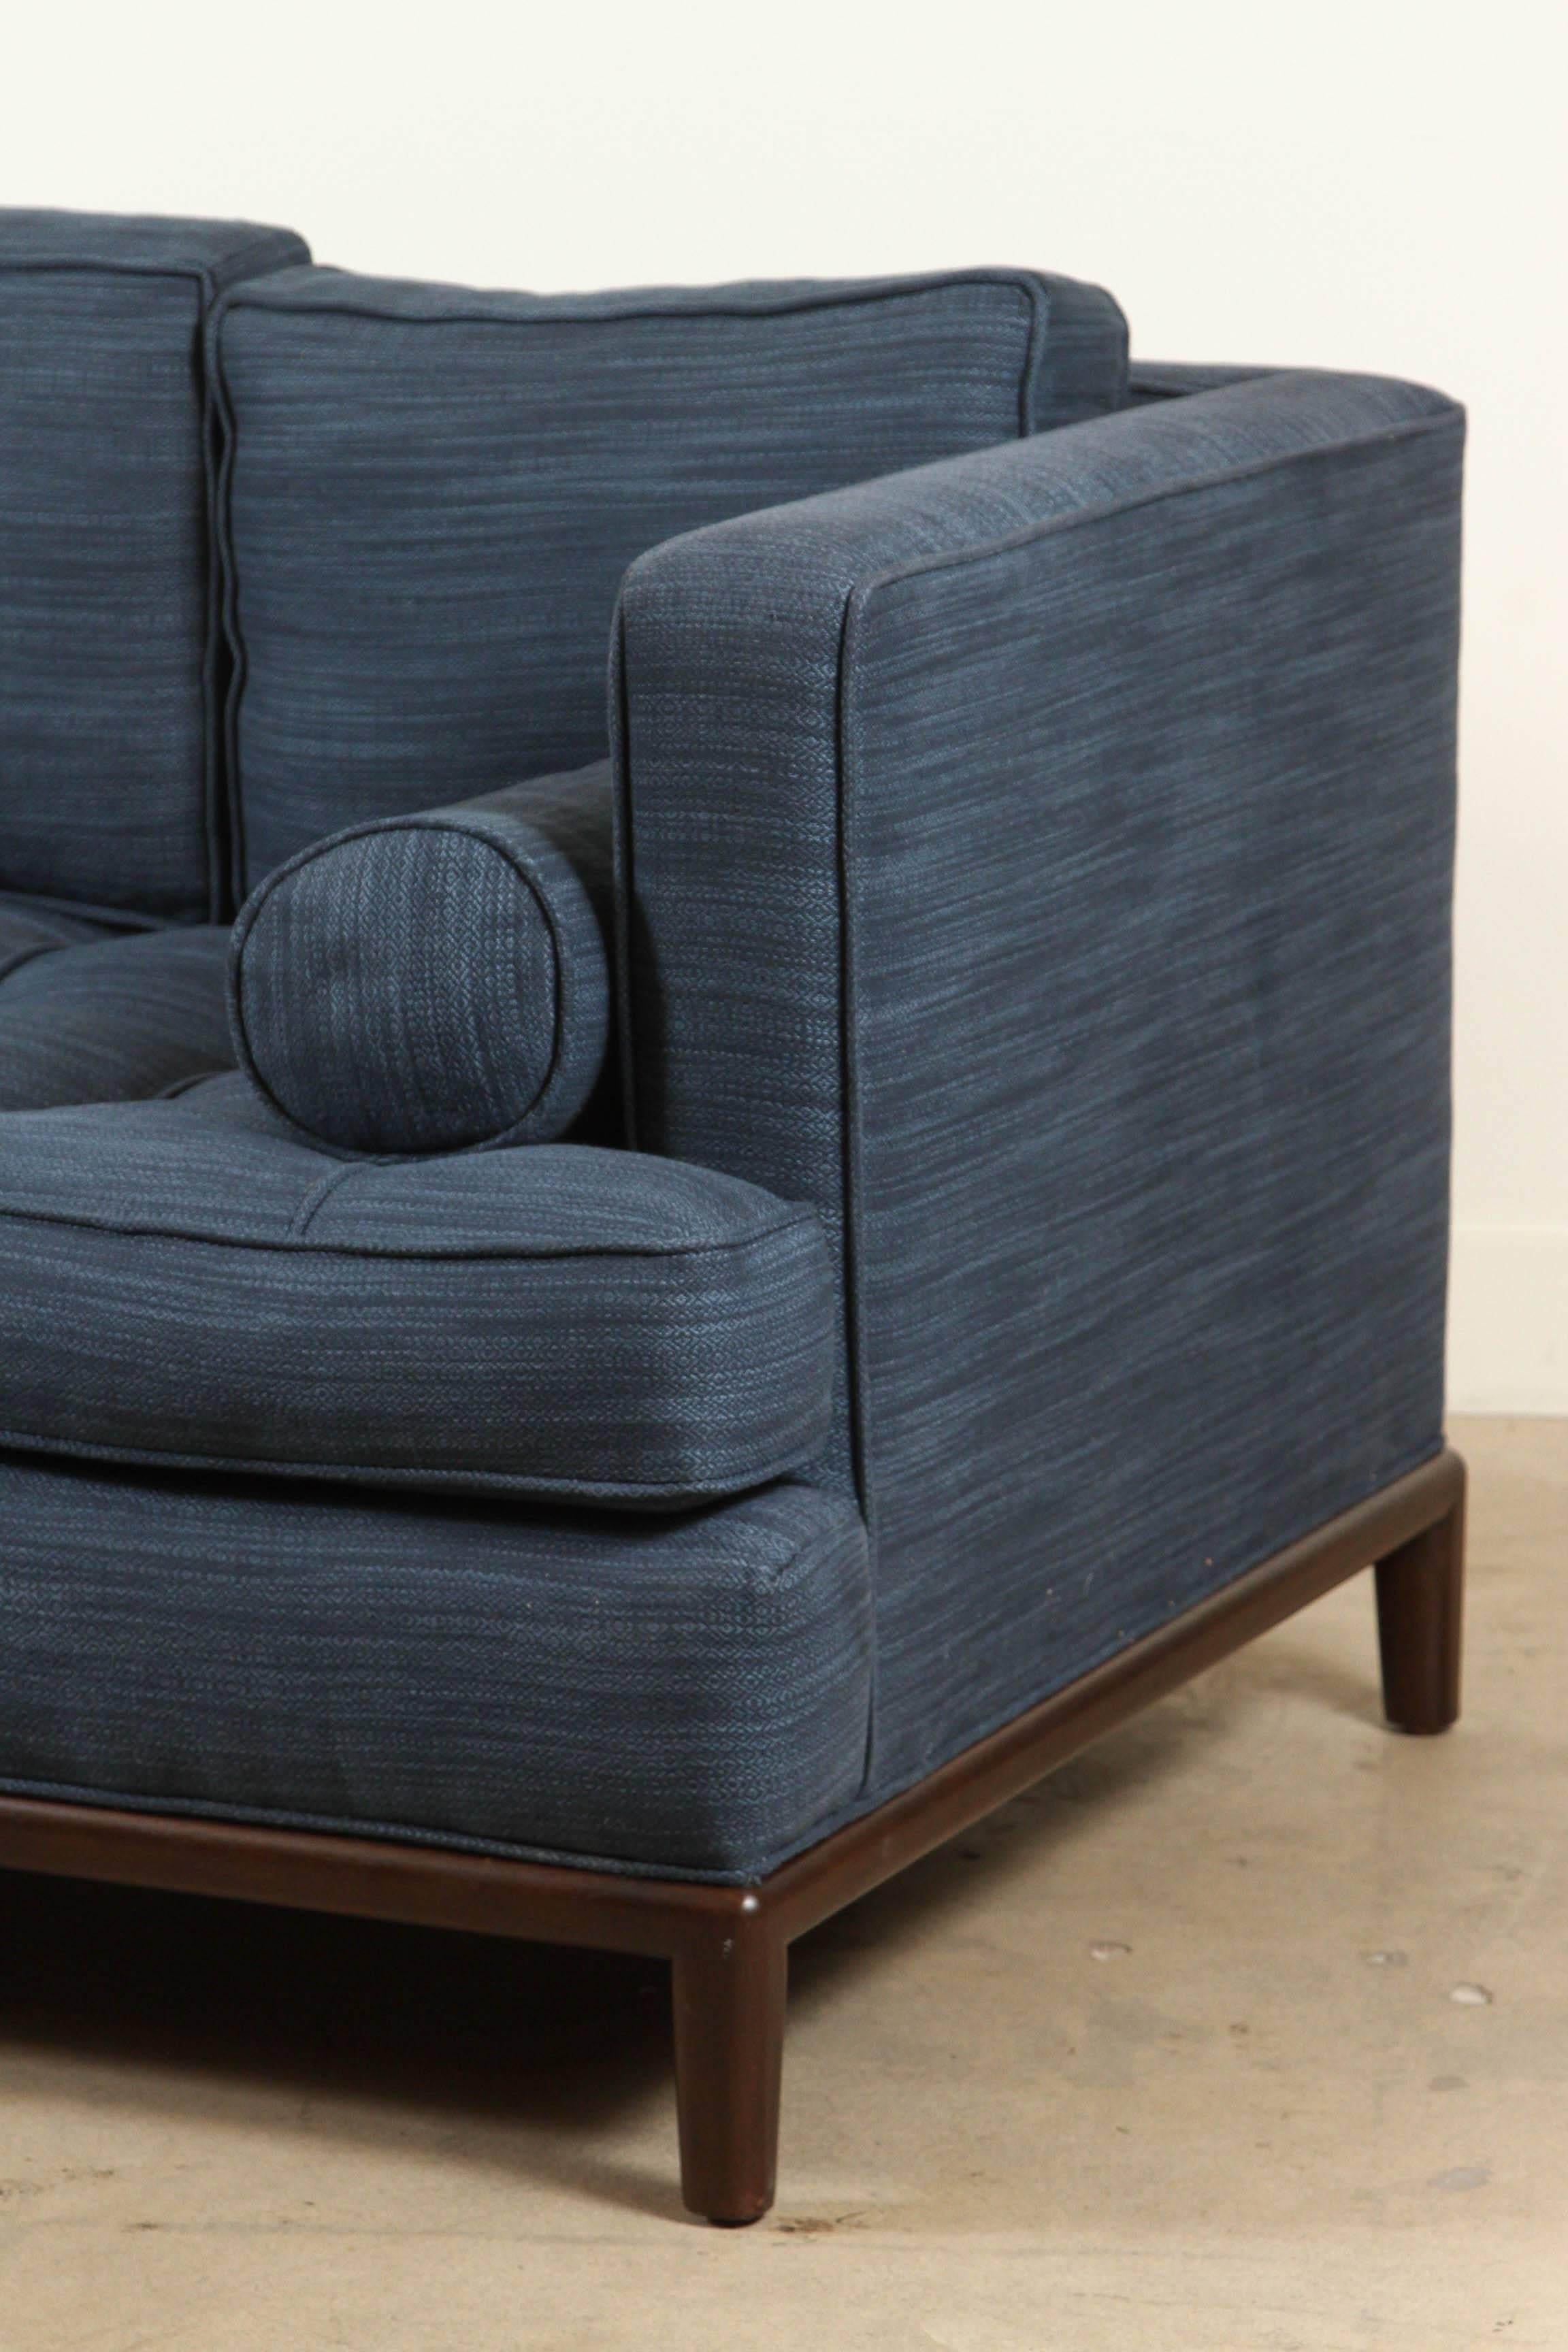 Montebello Sofa by Lawson-Fenning in Zak + Fox Fabric In Excellent Condition In Los Angeles, CA